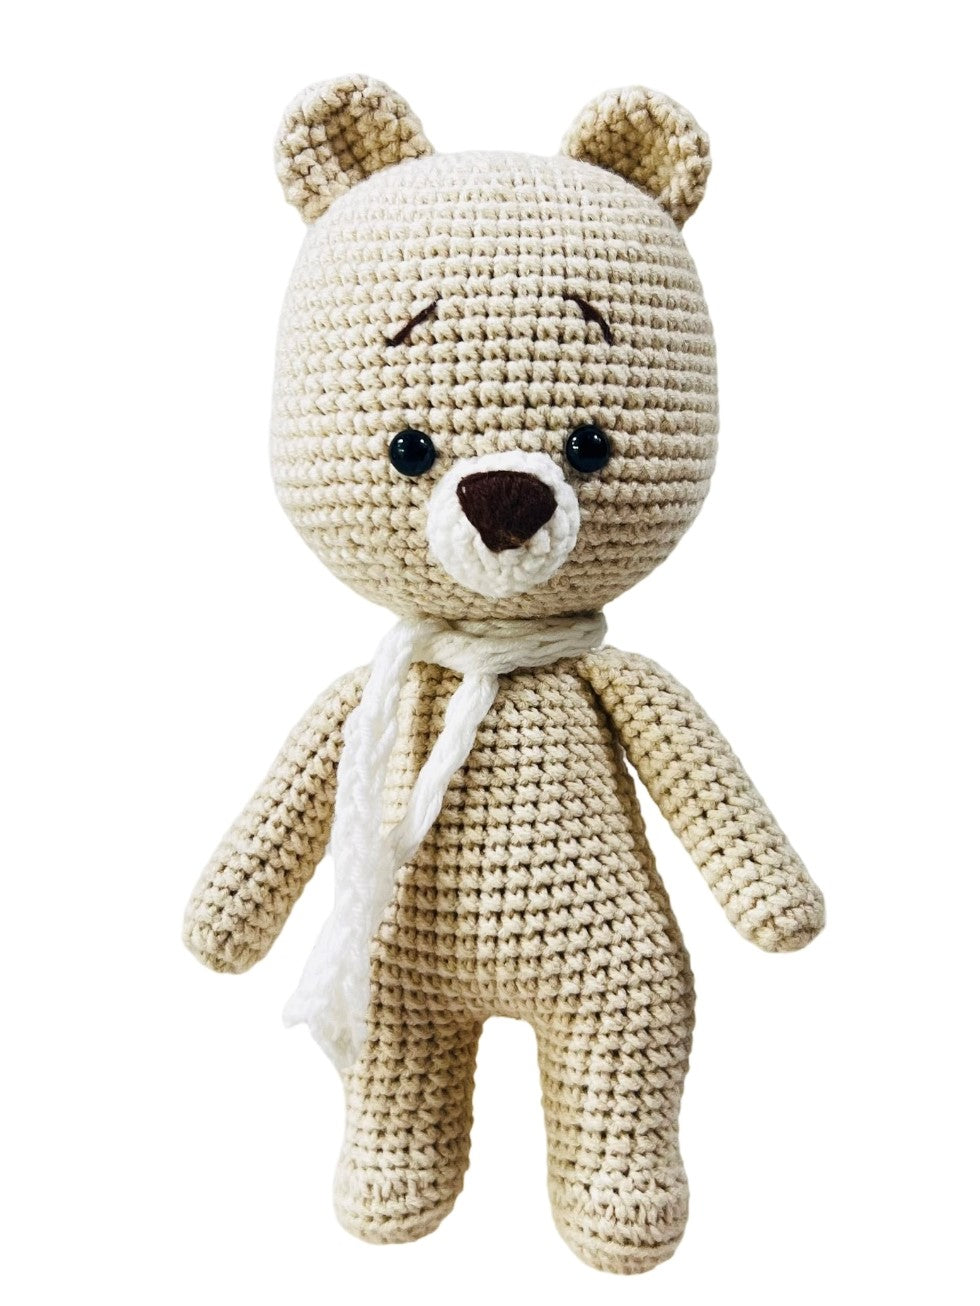 Crocheted Animal Doll - Bowie, the Bear